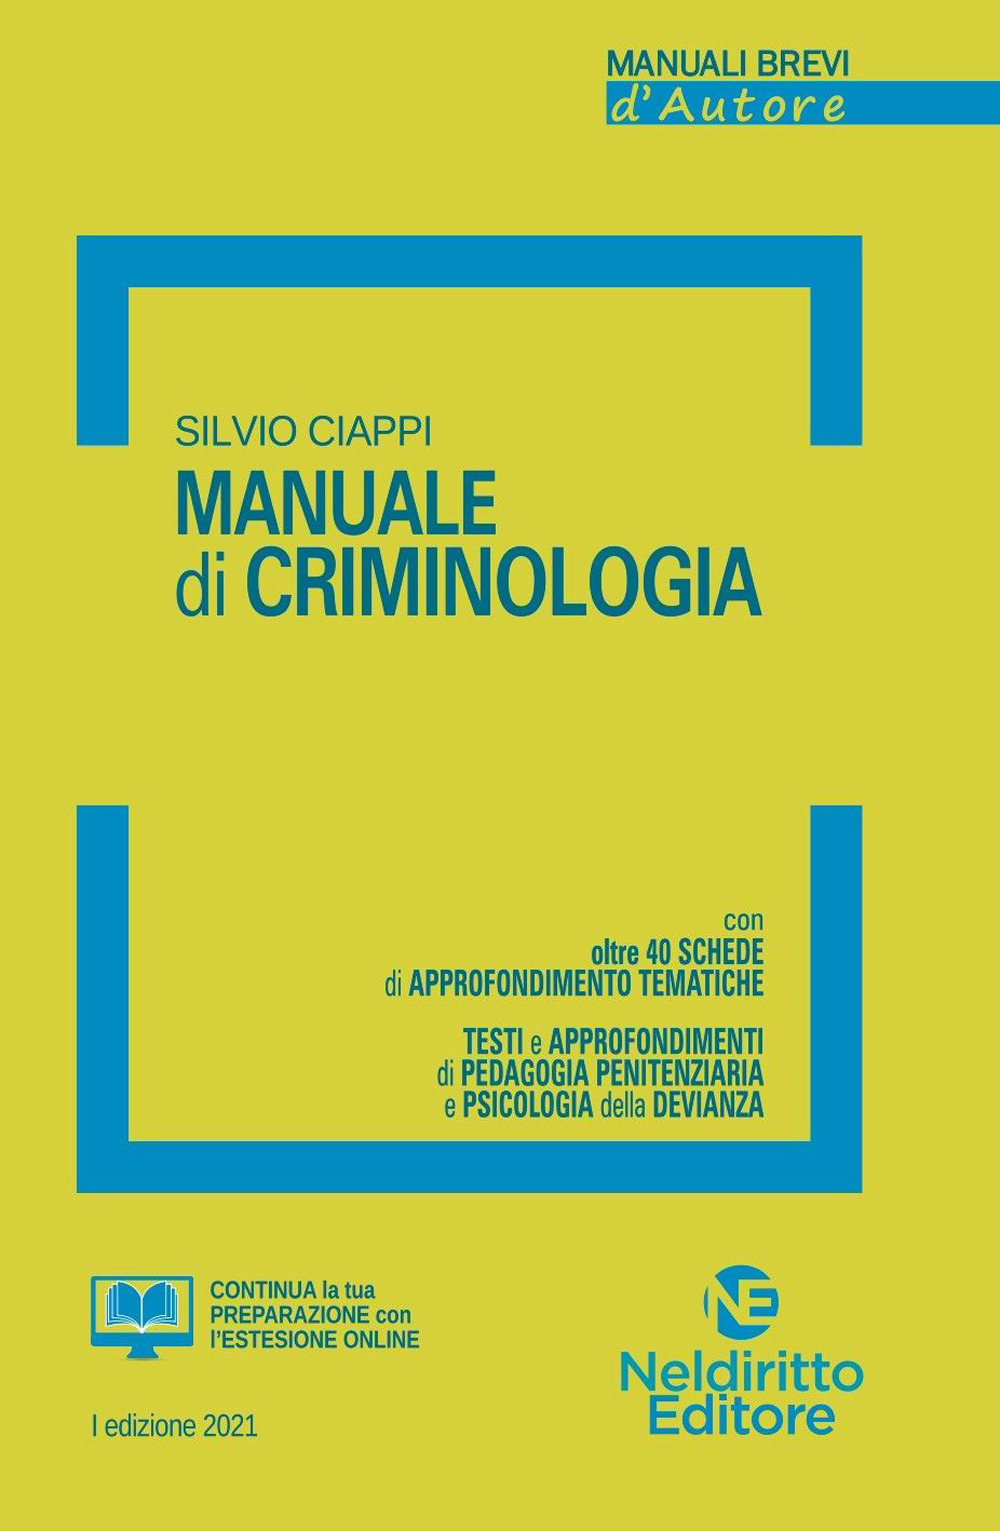 Manuale di criminologia. Nuova ediz.